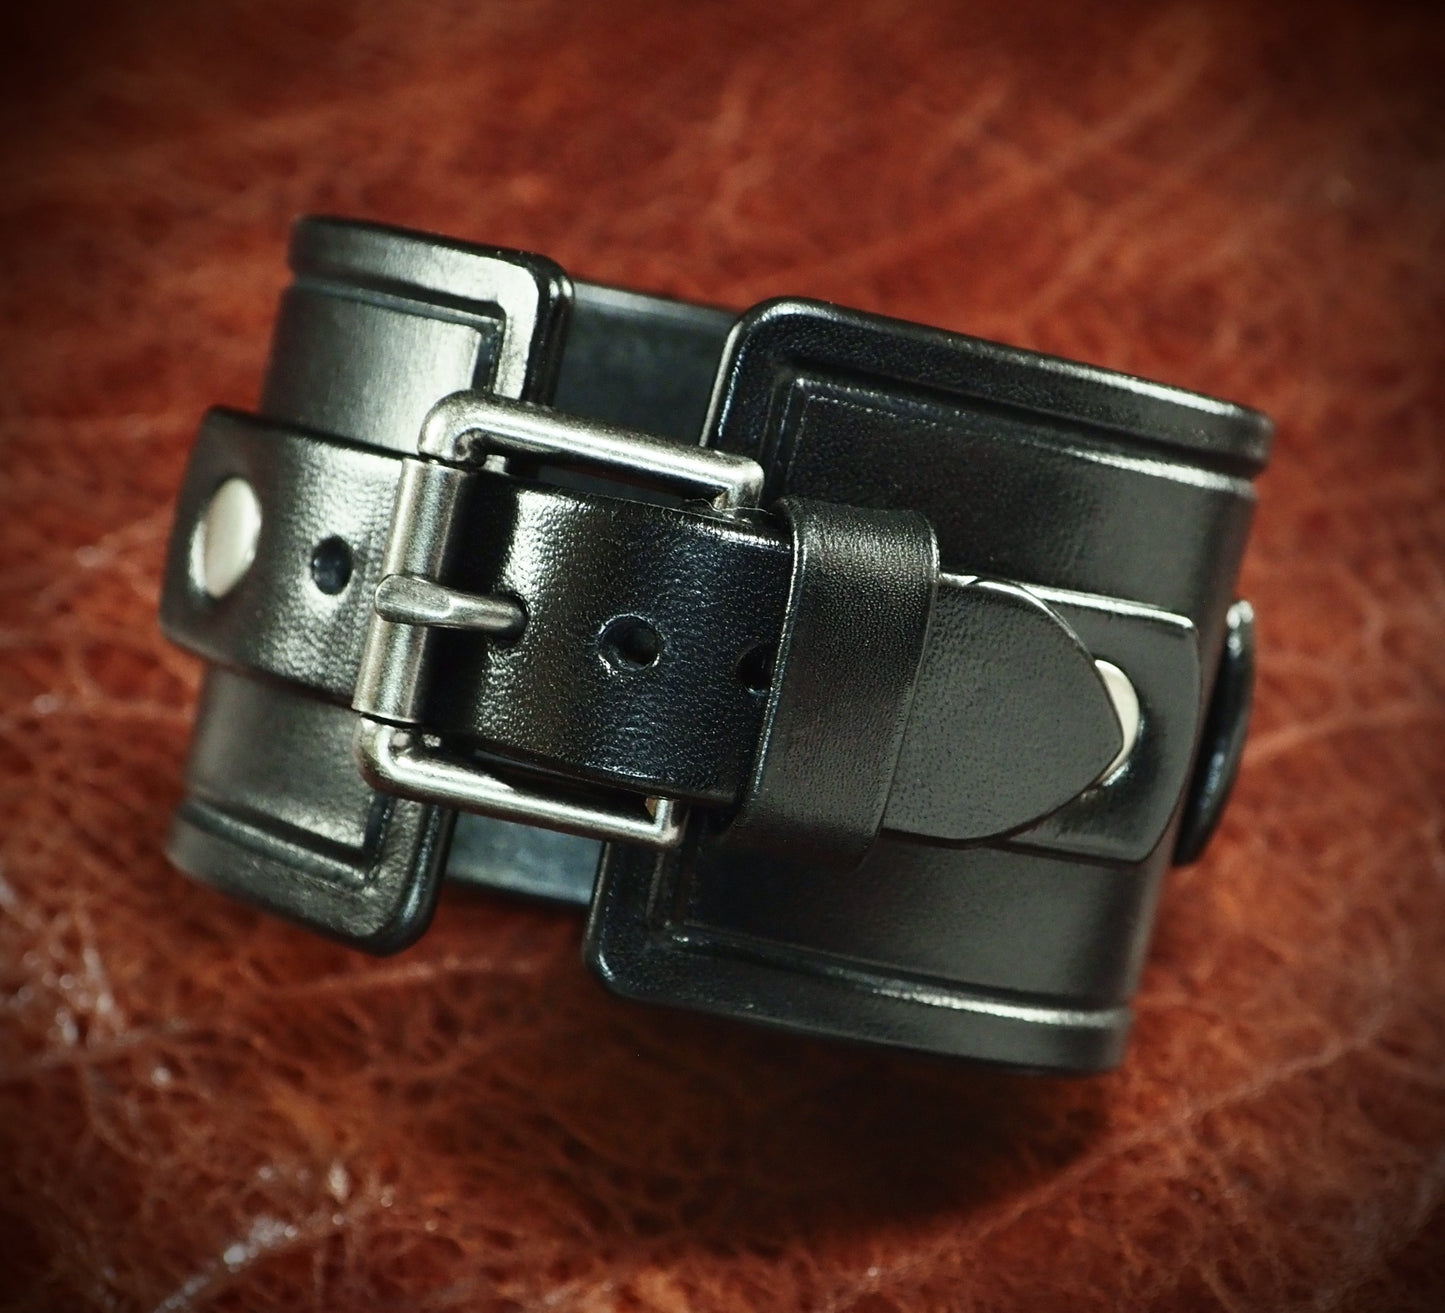 Black Leather cuff watch : Refined American craft